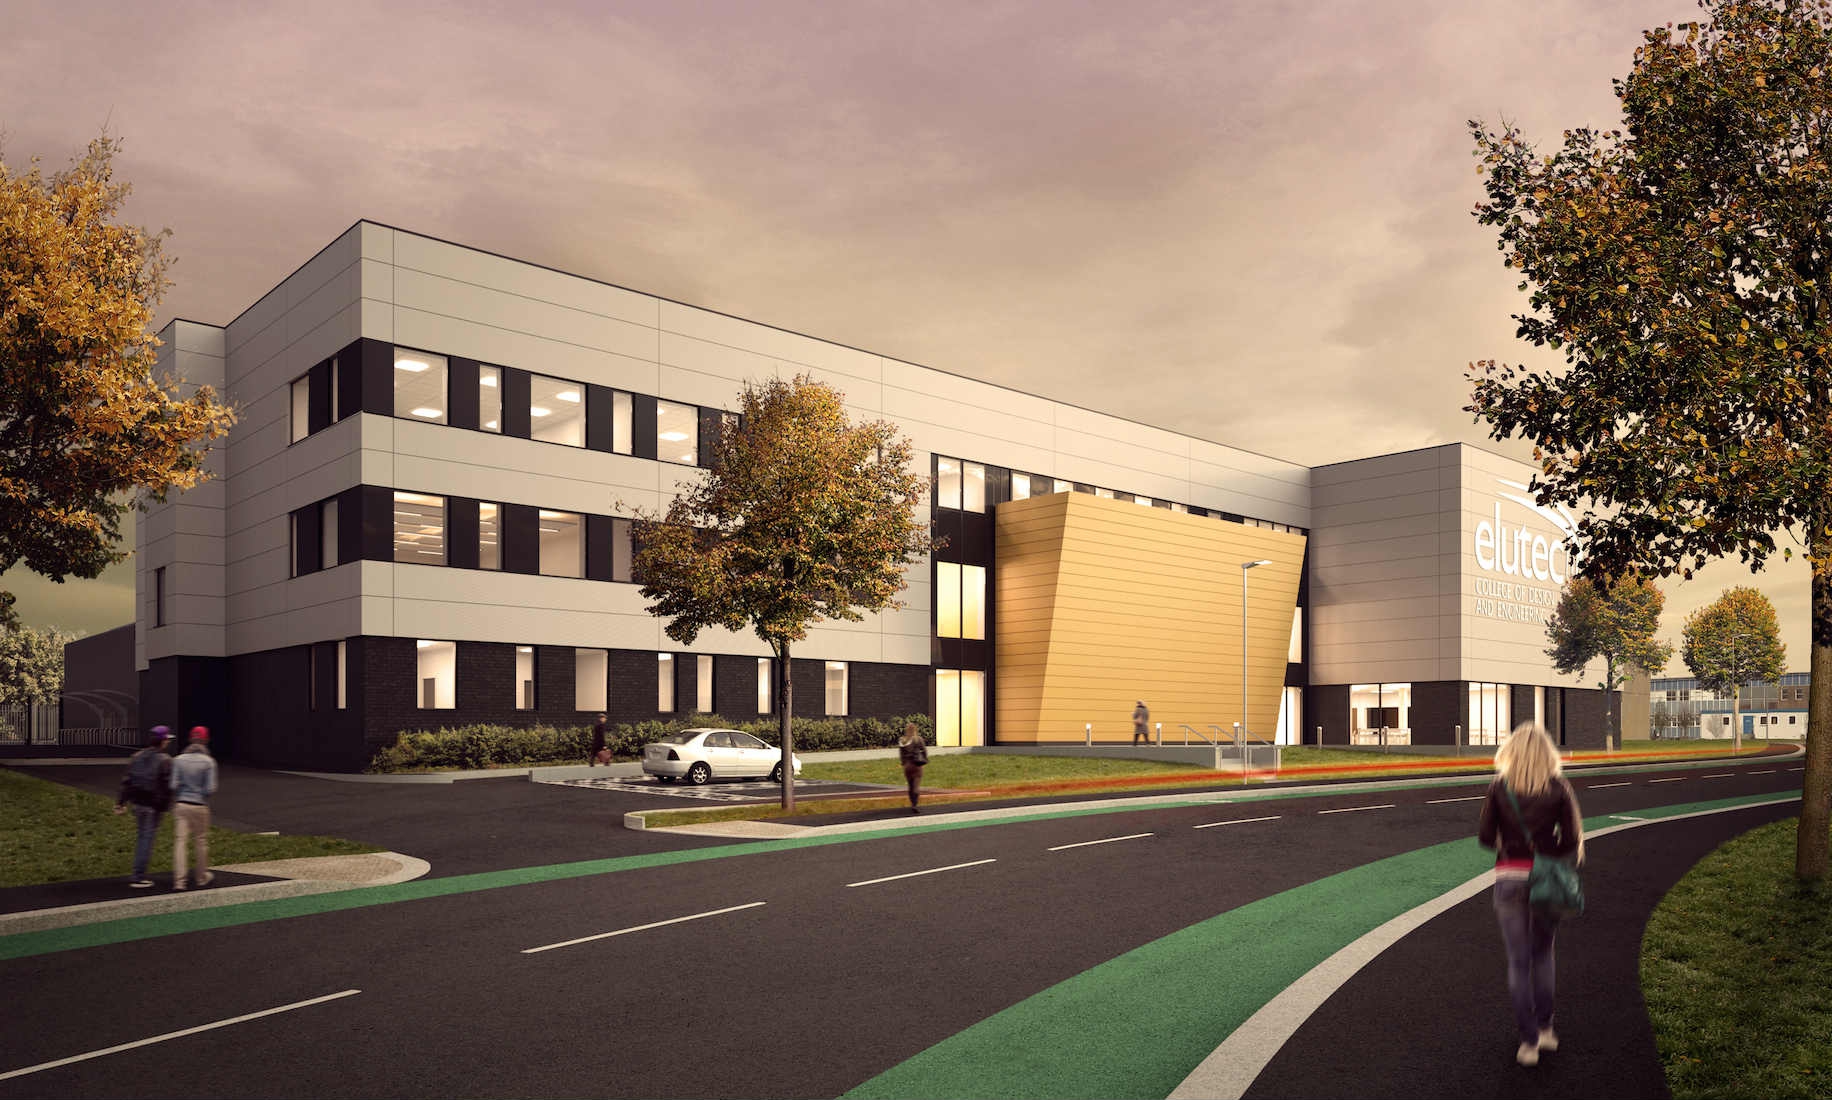 Ethos inherent in the design of new university technical college in Dagenham